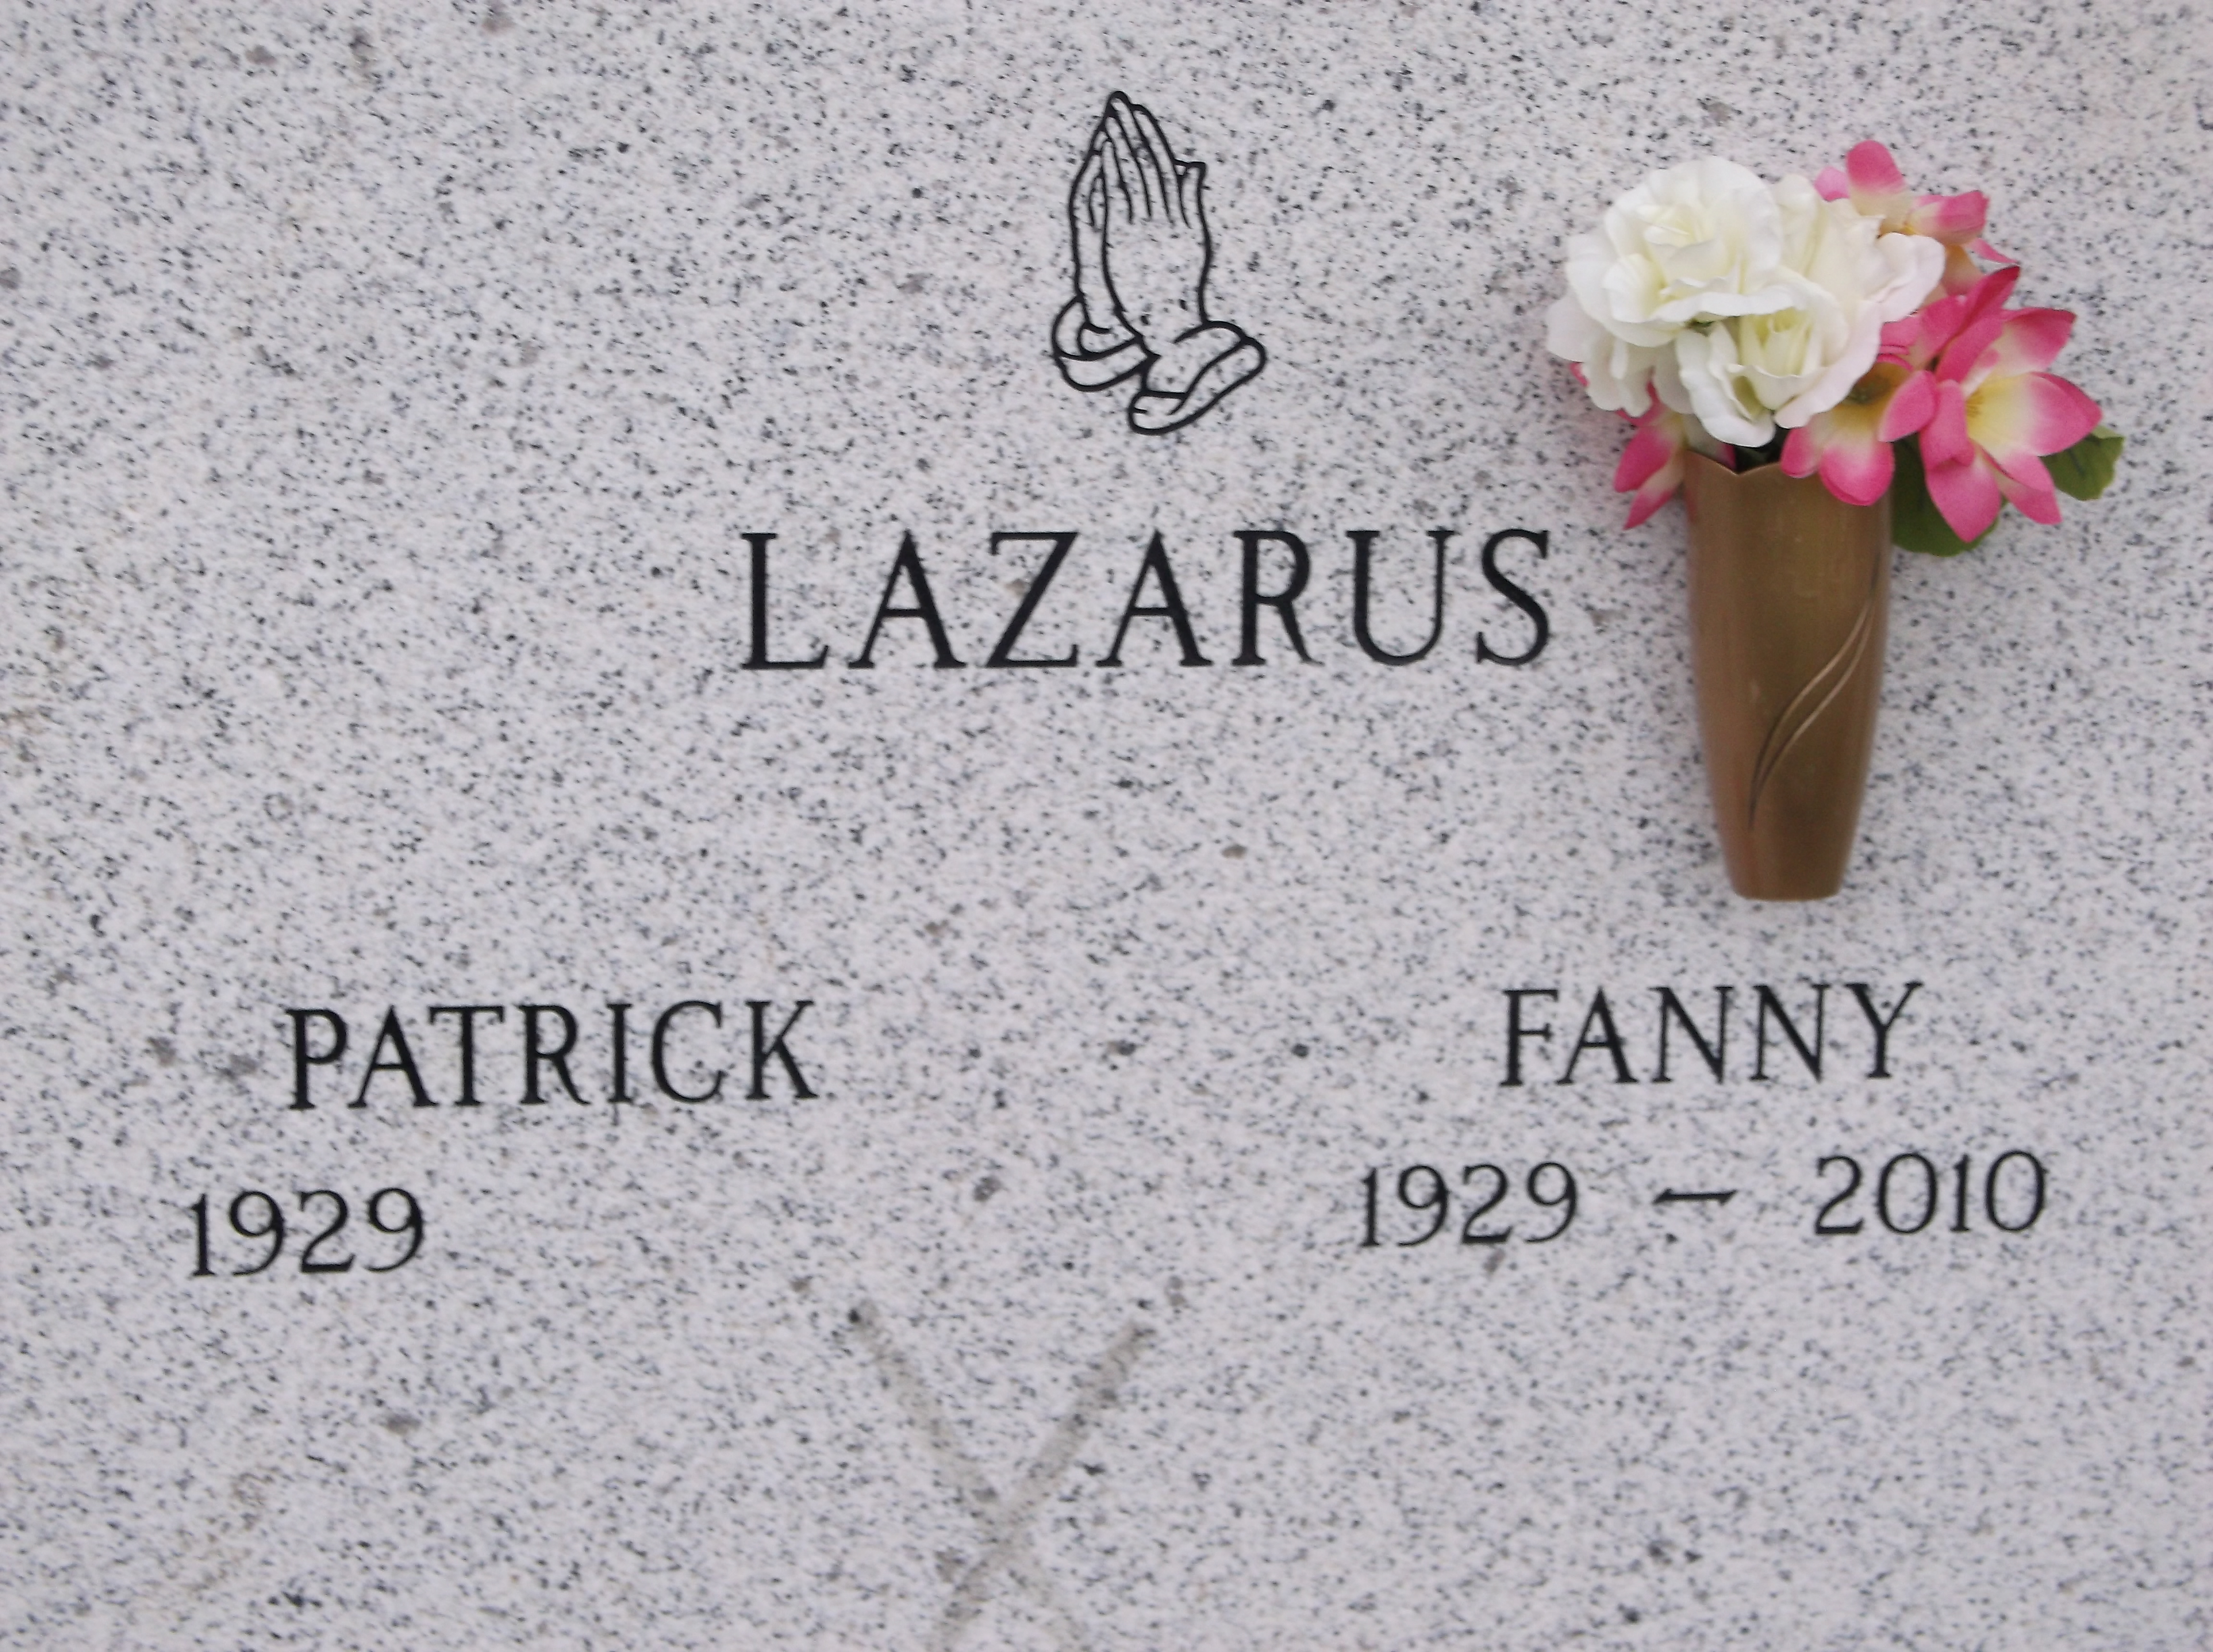 Patrick Lazarus